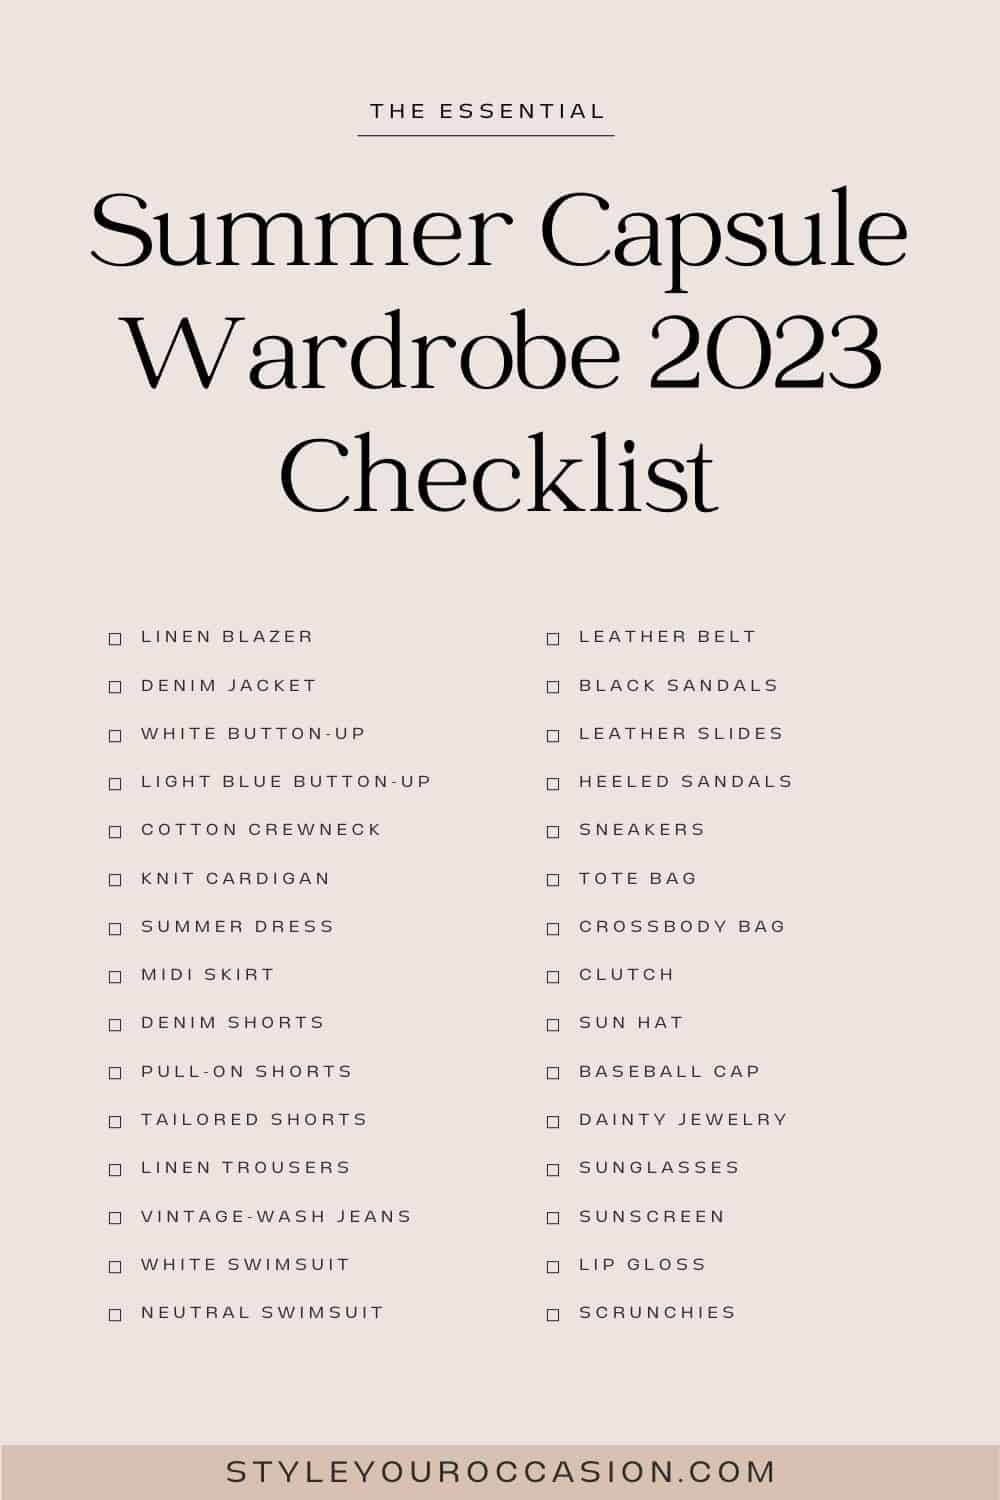 image of a summer capsule wardrobe 2023 itemized checklist